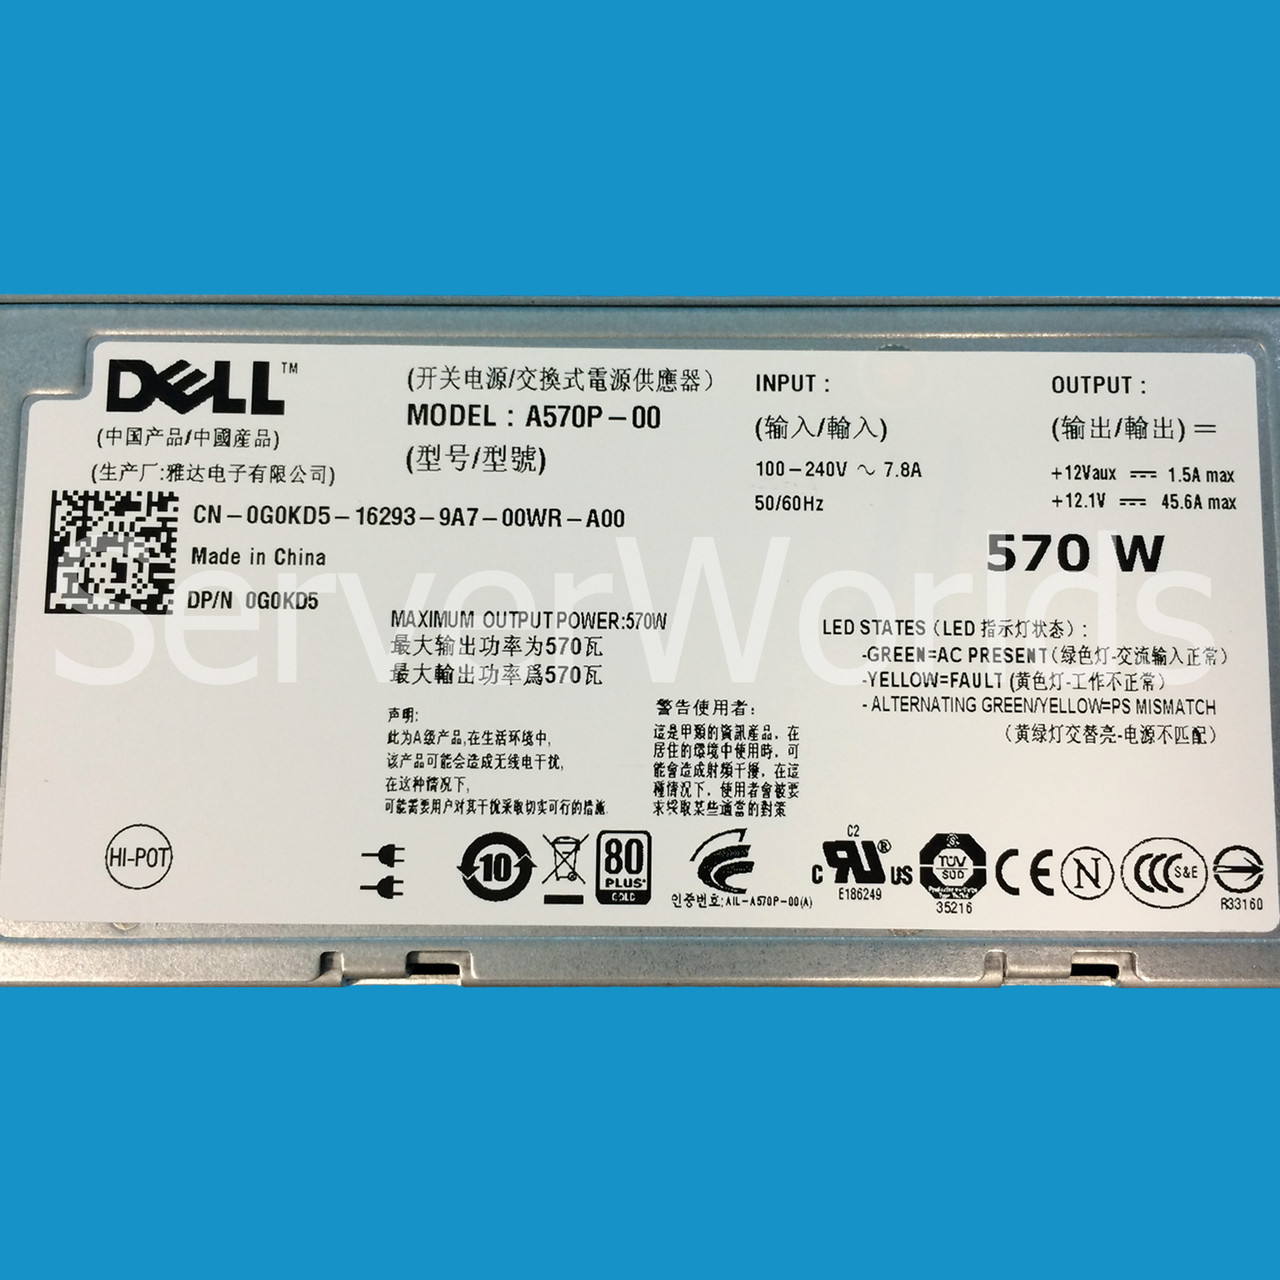 Dell G0KD5 Poweredge R710 570W Power Supply A570P-00